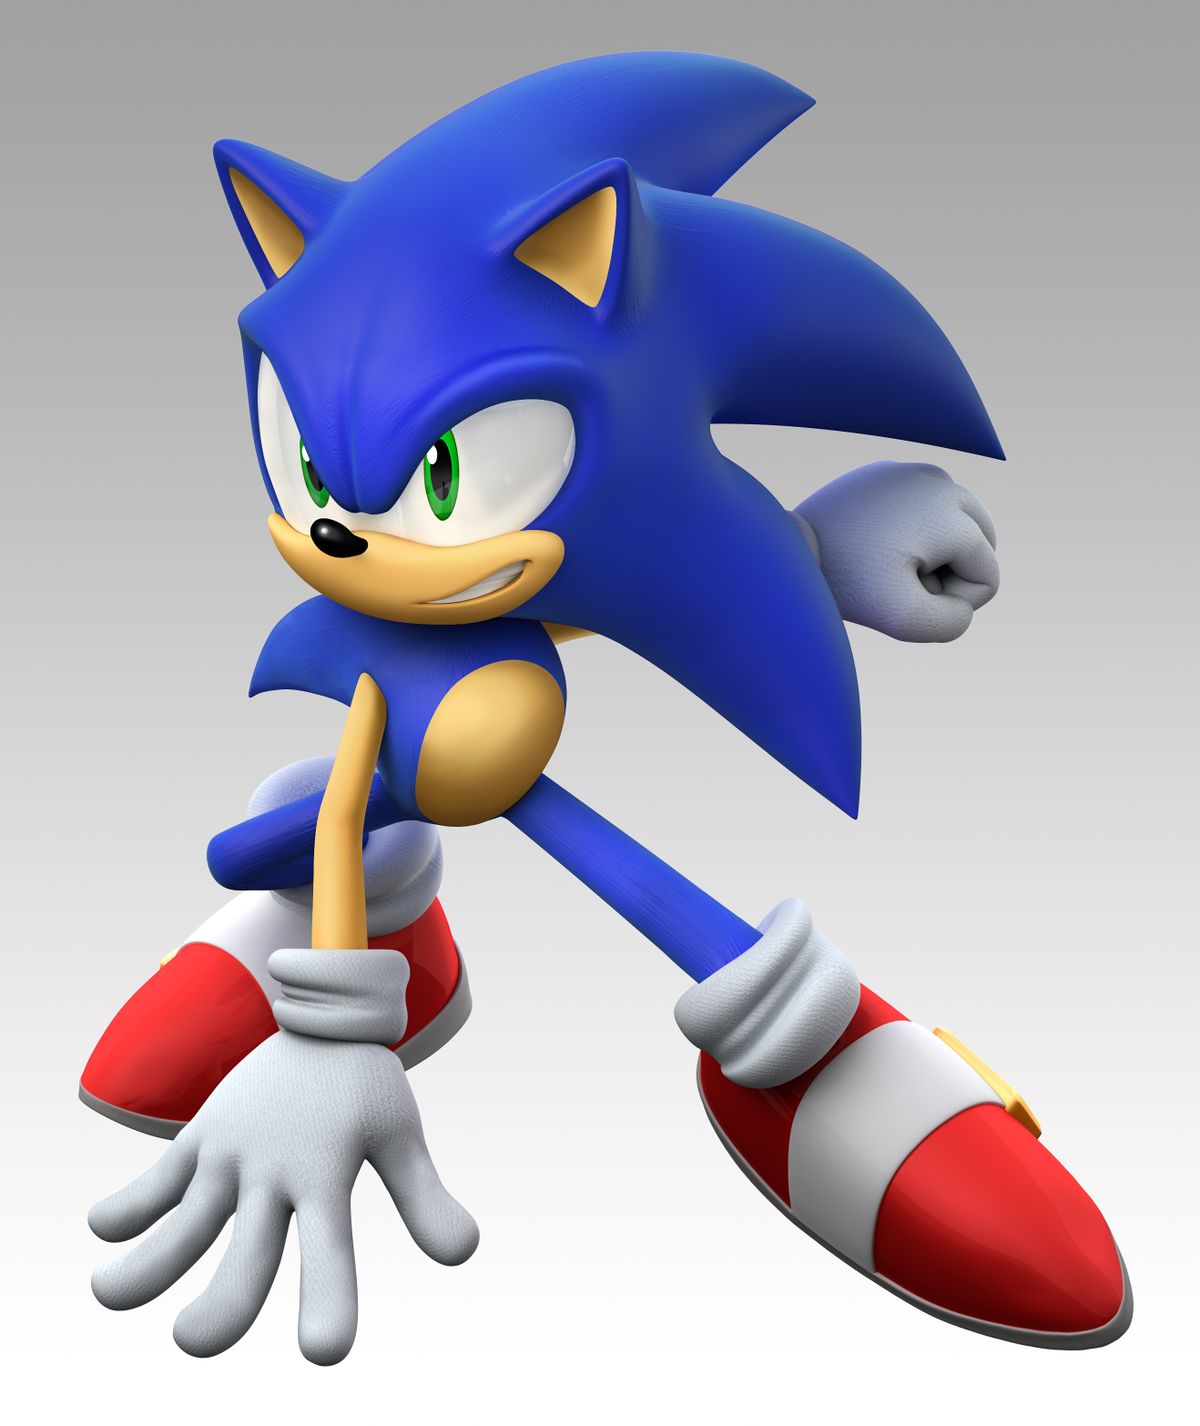 Sonic the Hedgehog (2006)/Gallery, Sega Wiki